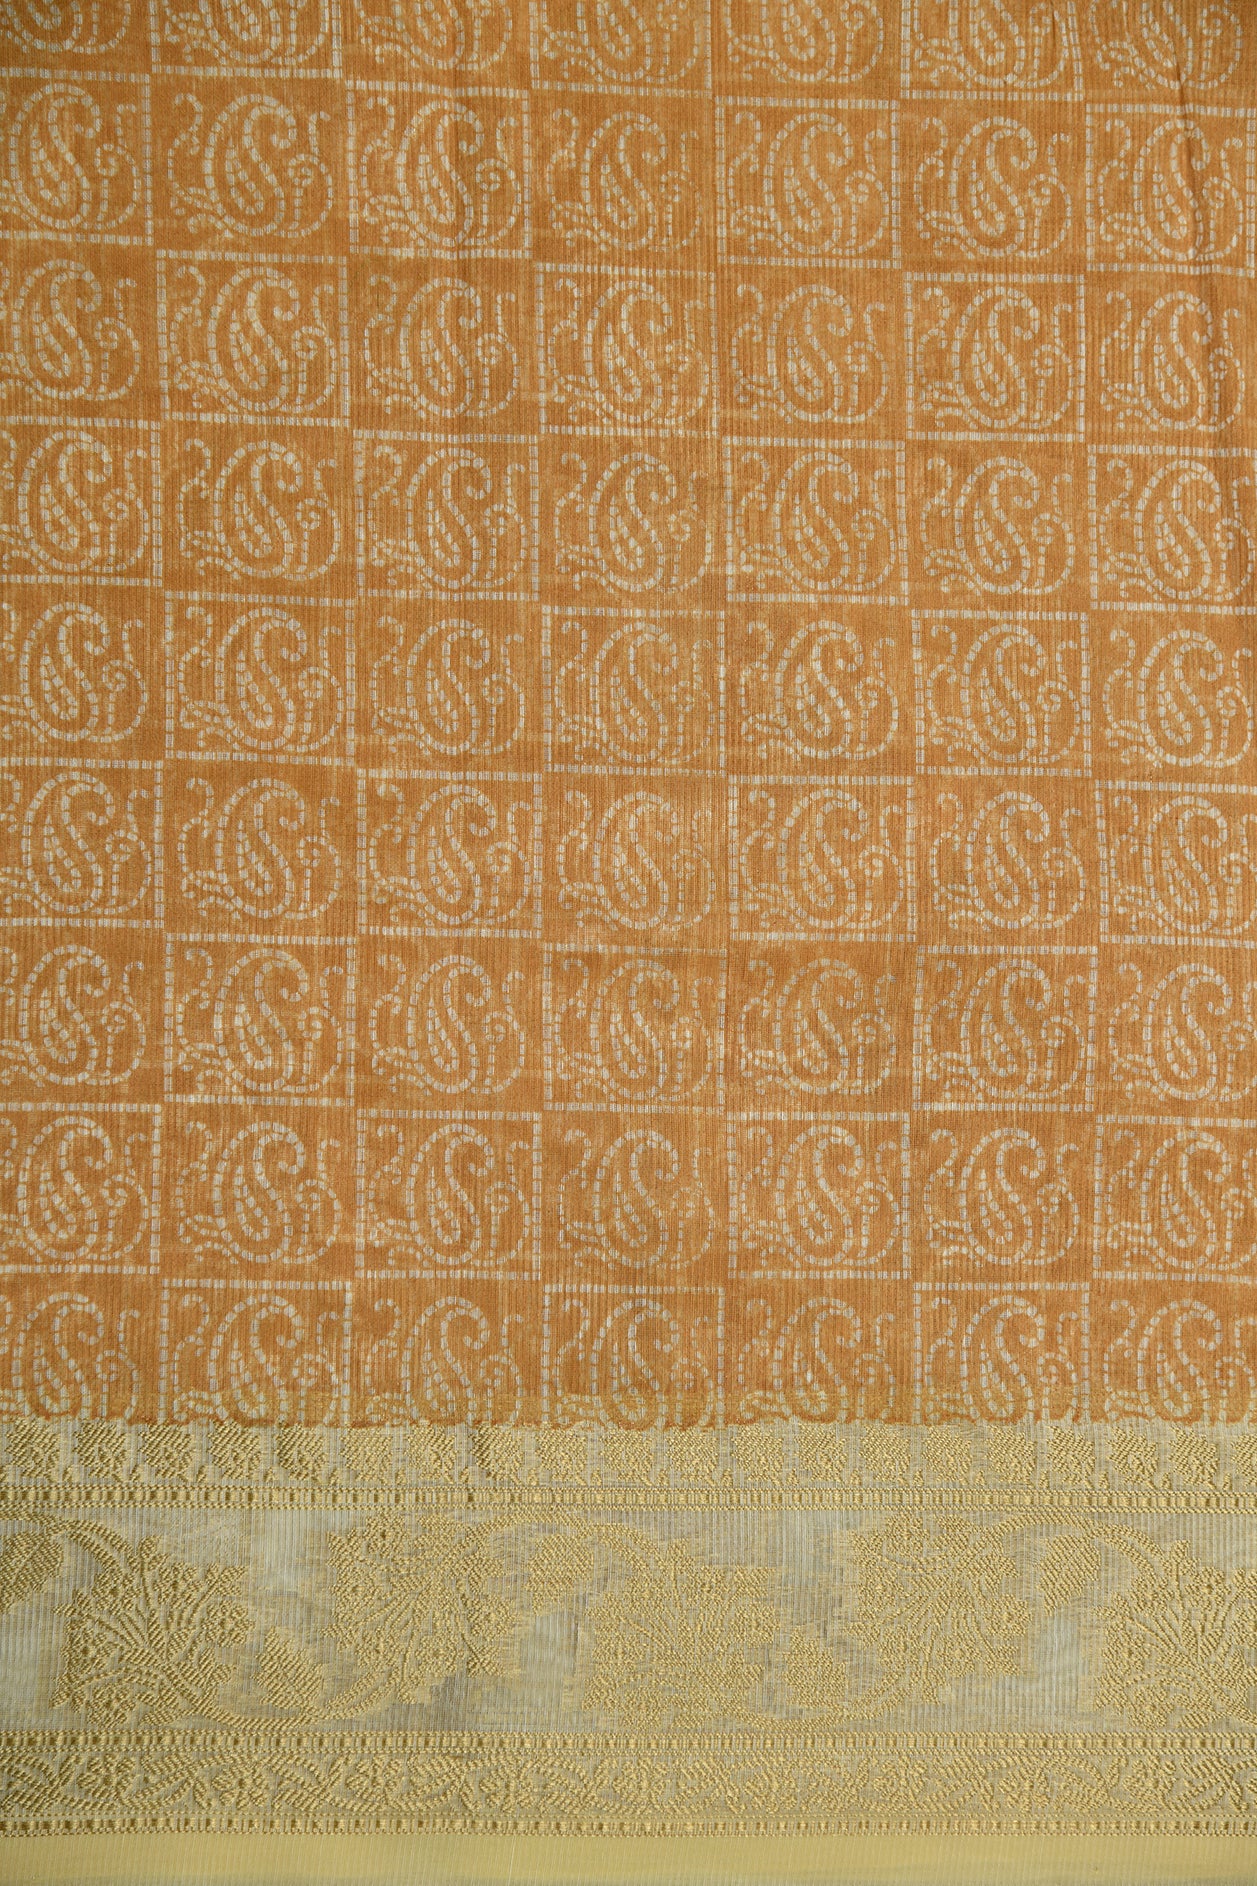 Leaf Design Border With Checks And Paisley Light Sand Brown Kota Cotton Saree